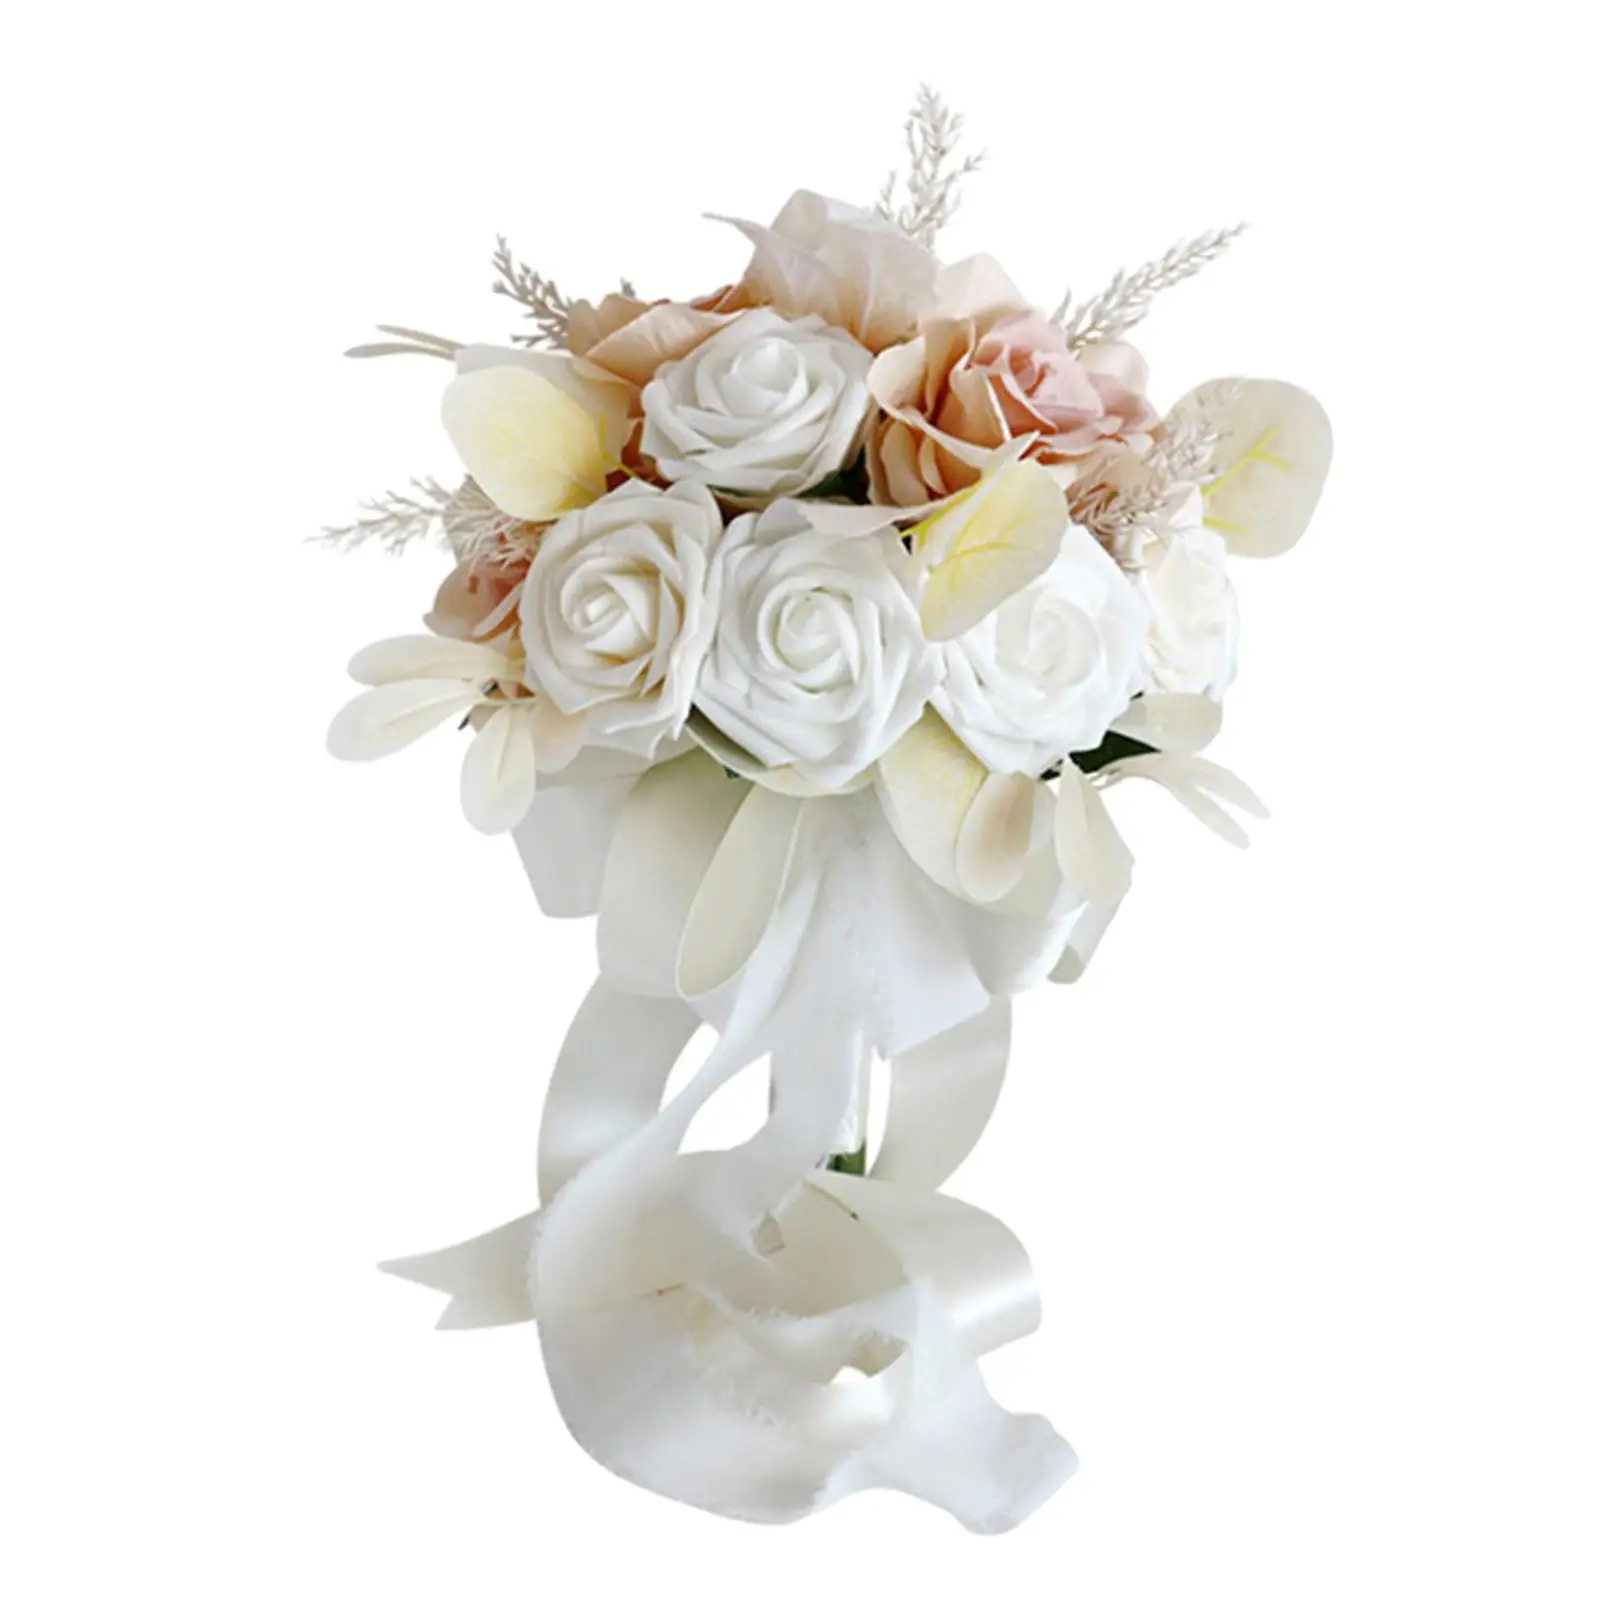 Bridal Bouquet Centerpiece Elegant 22cmx30cm Artificial Flowers Decoration for Anniversary Wedding Party Bridal Shower Ceremony